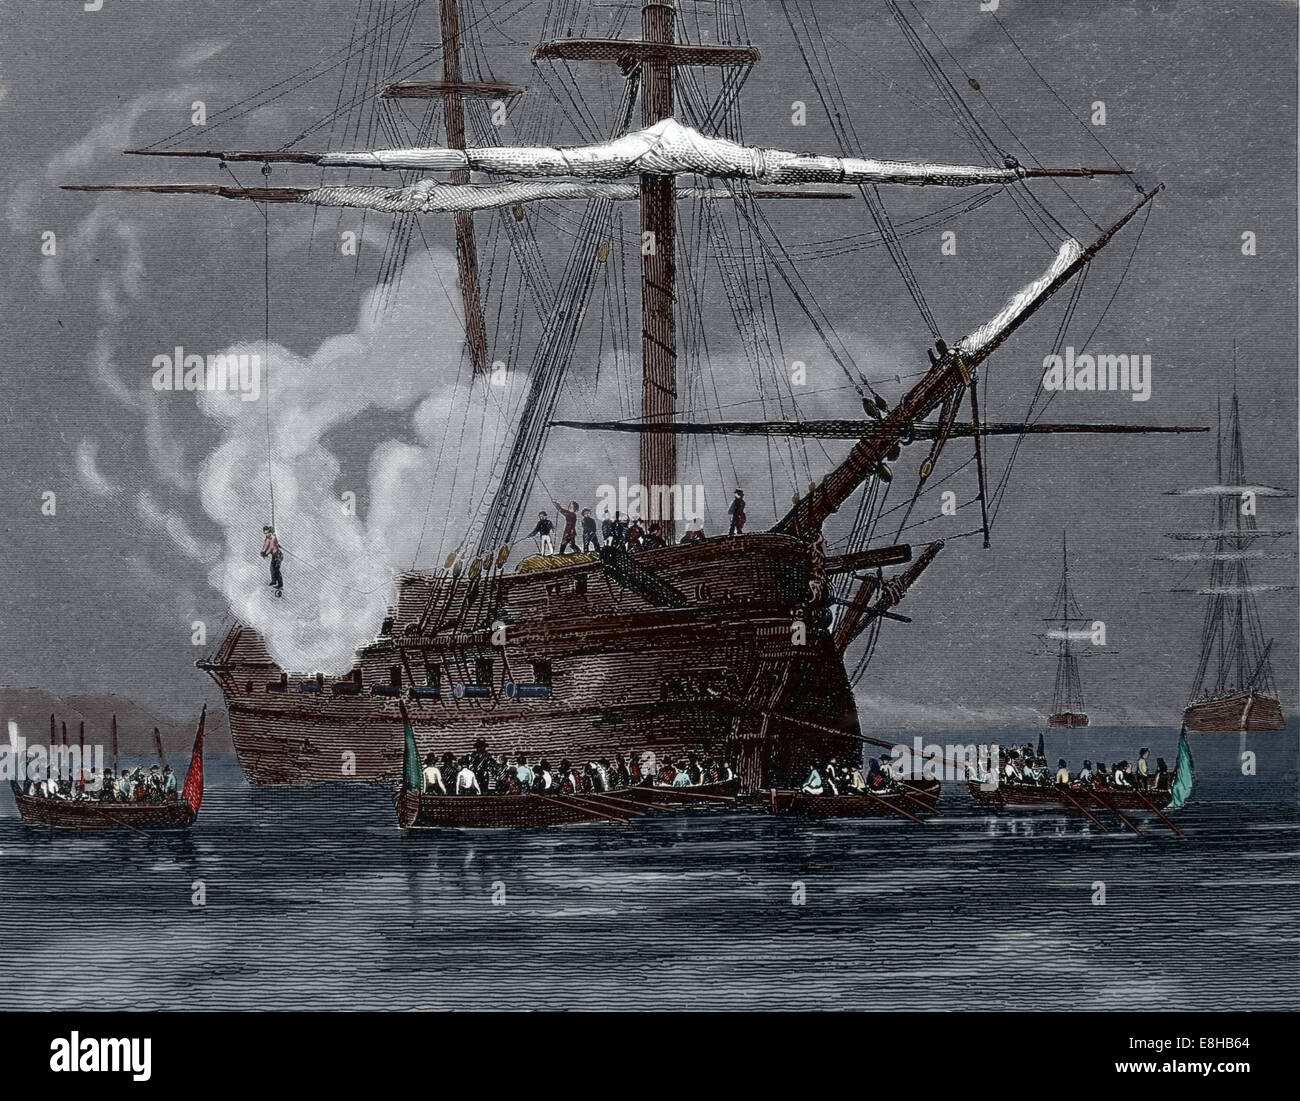 Keelhauling. El castigo infligido a los marineros en el mar. Siglo xix. Color. Foto de stock